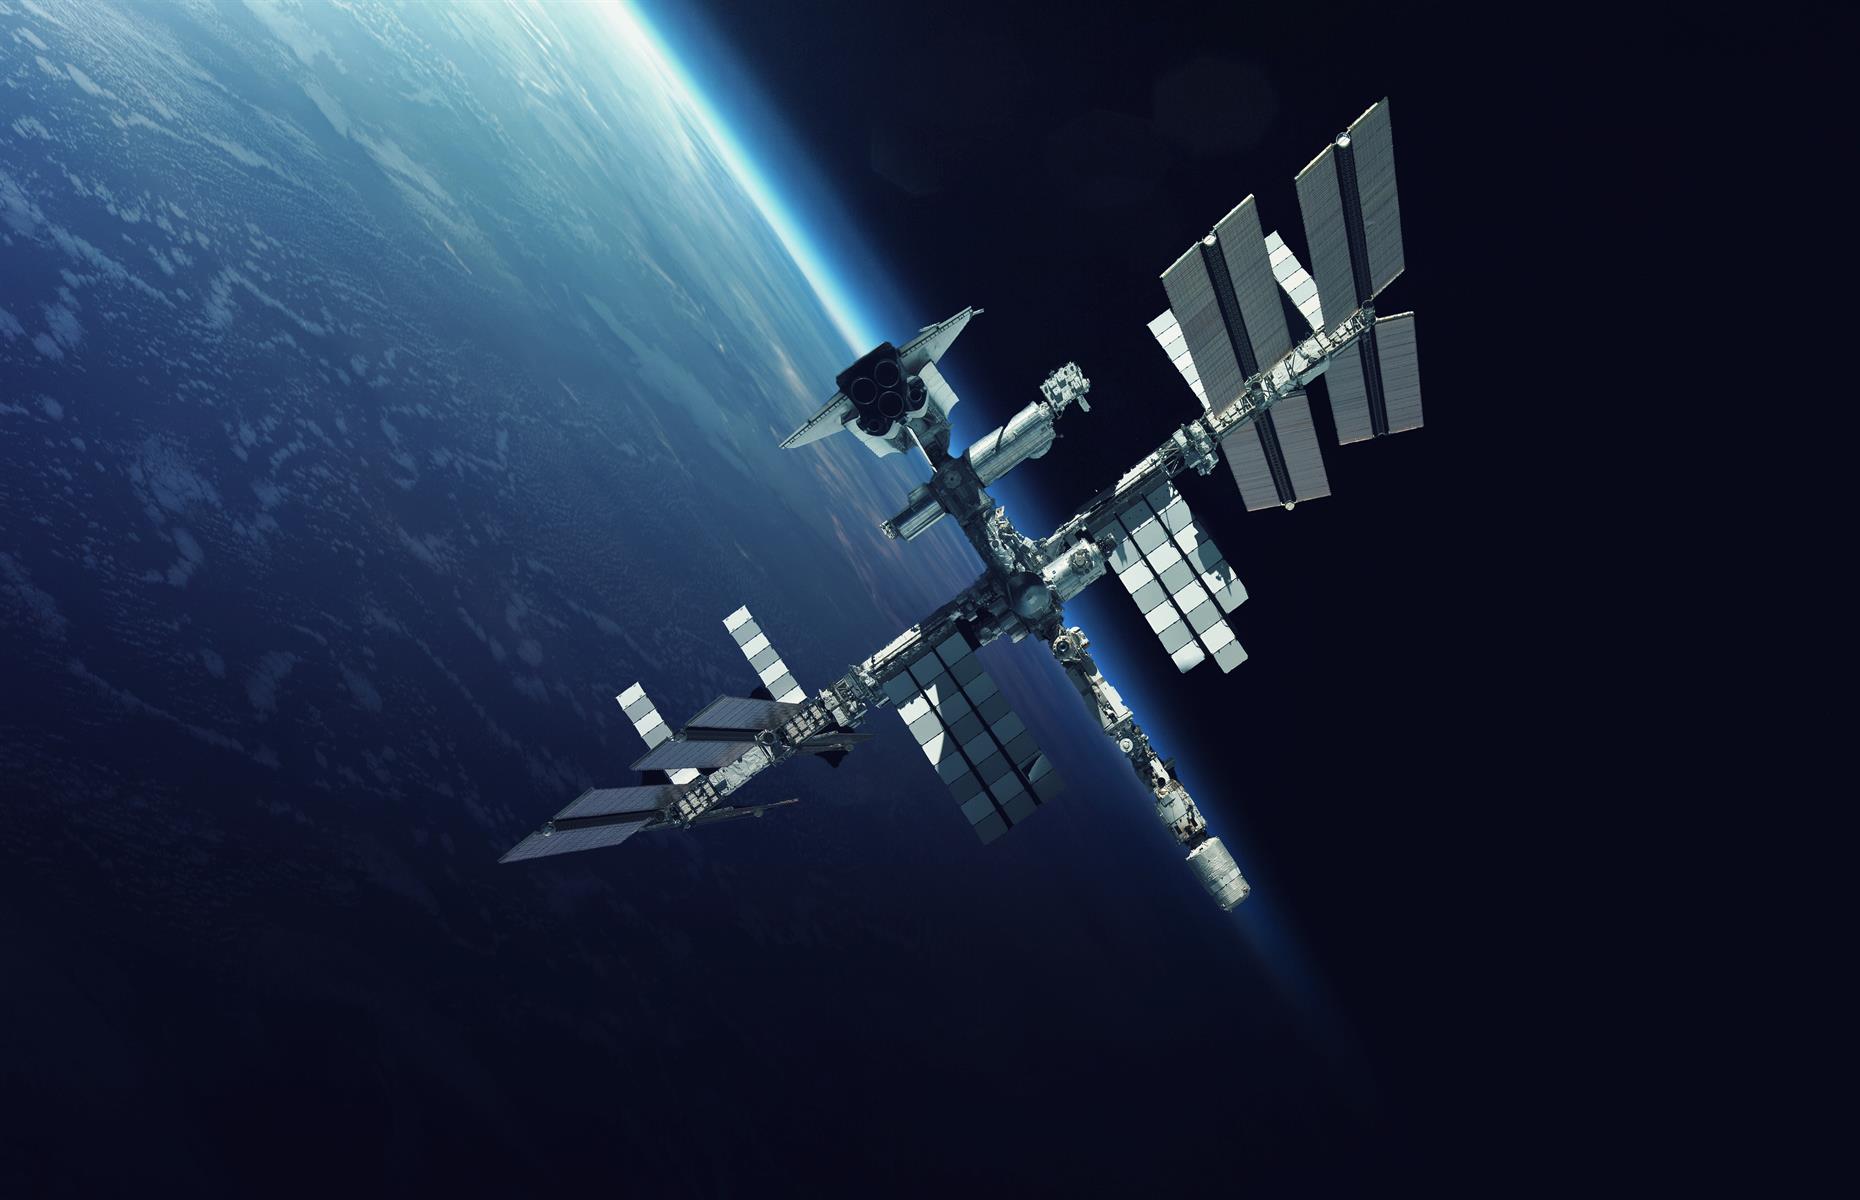 International Space Station: share of $150 billion (£115bn) 